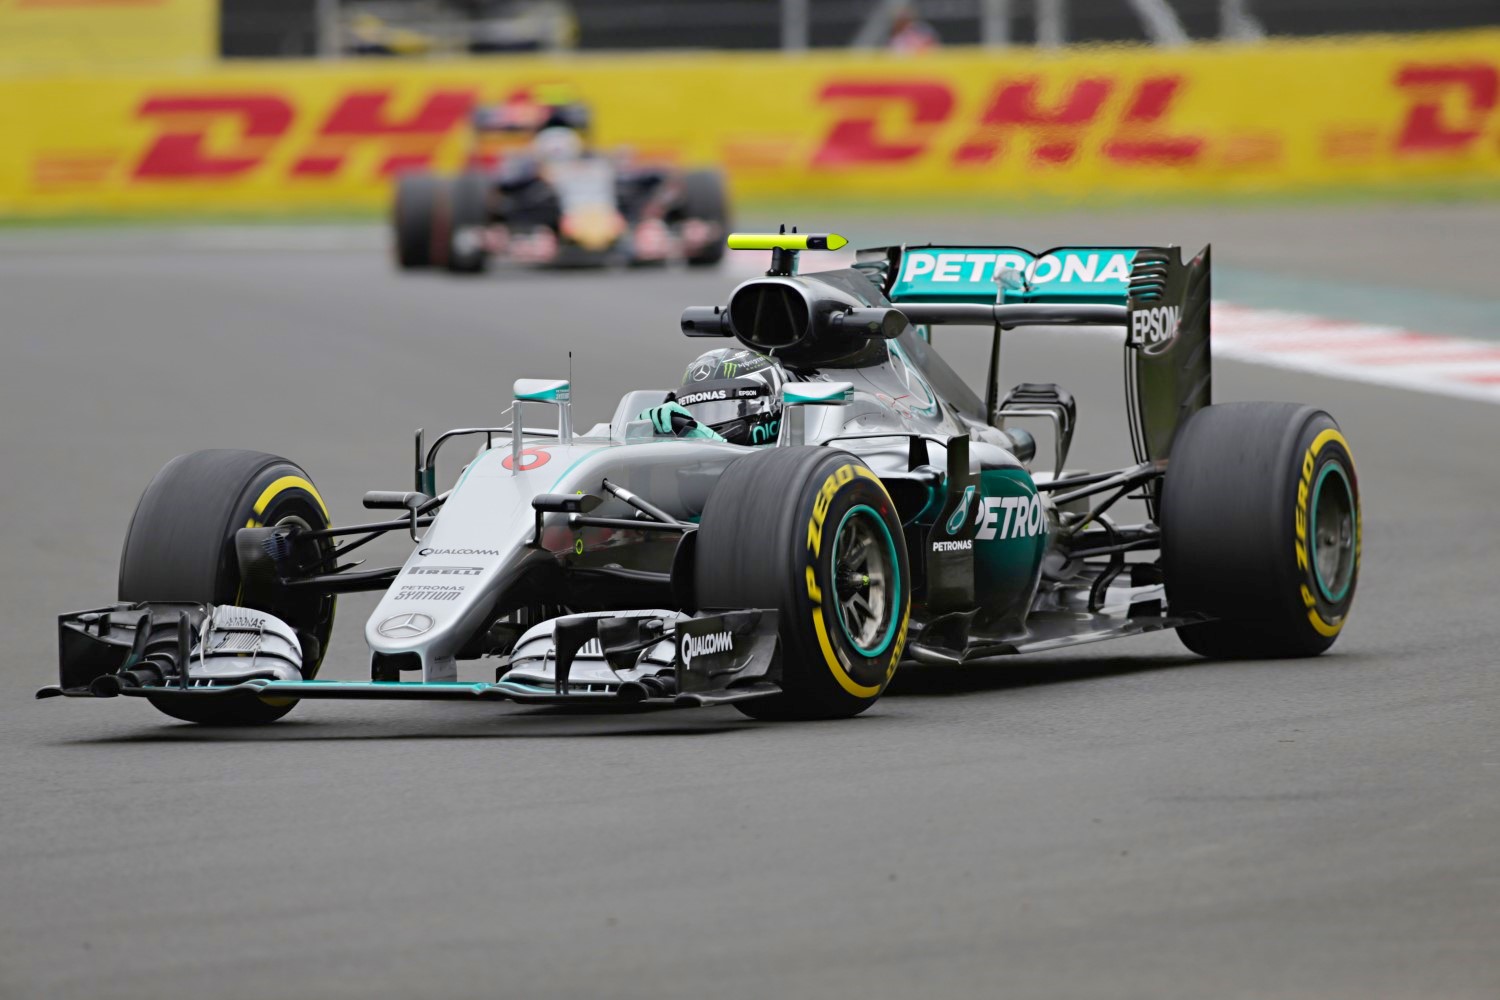 Rosberg is due for a car failure